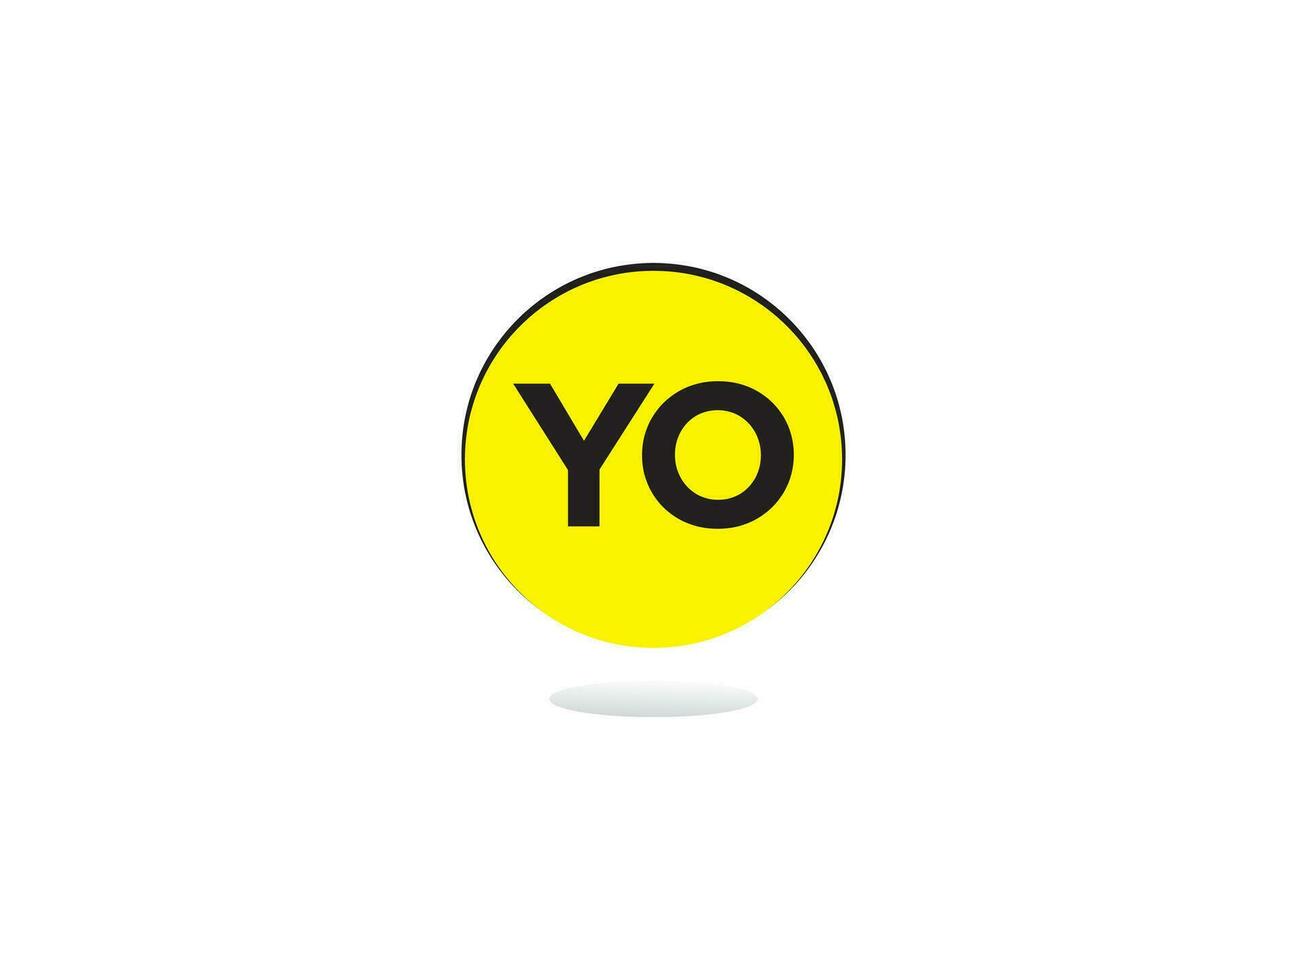 alfabet brev yo oy företag logotyp, kreativ yo logotyp ikon design vektor